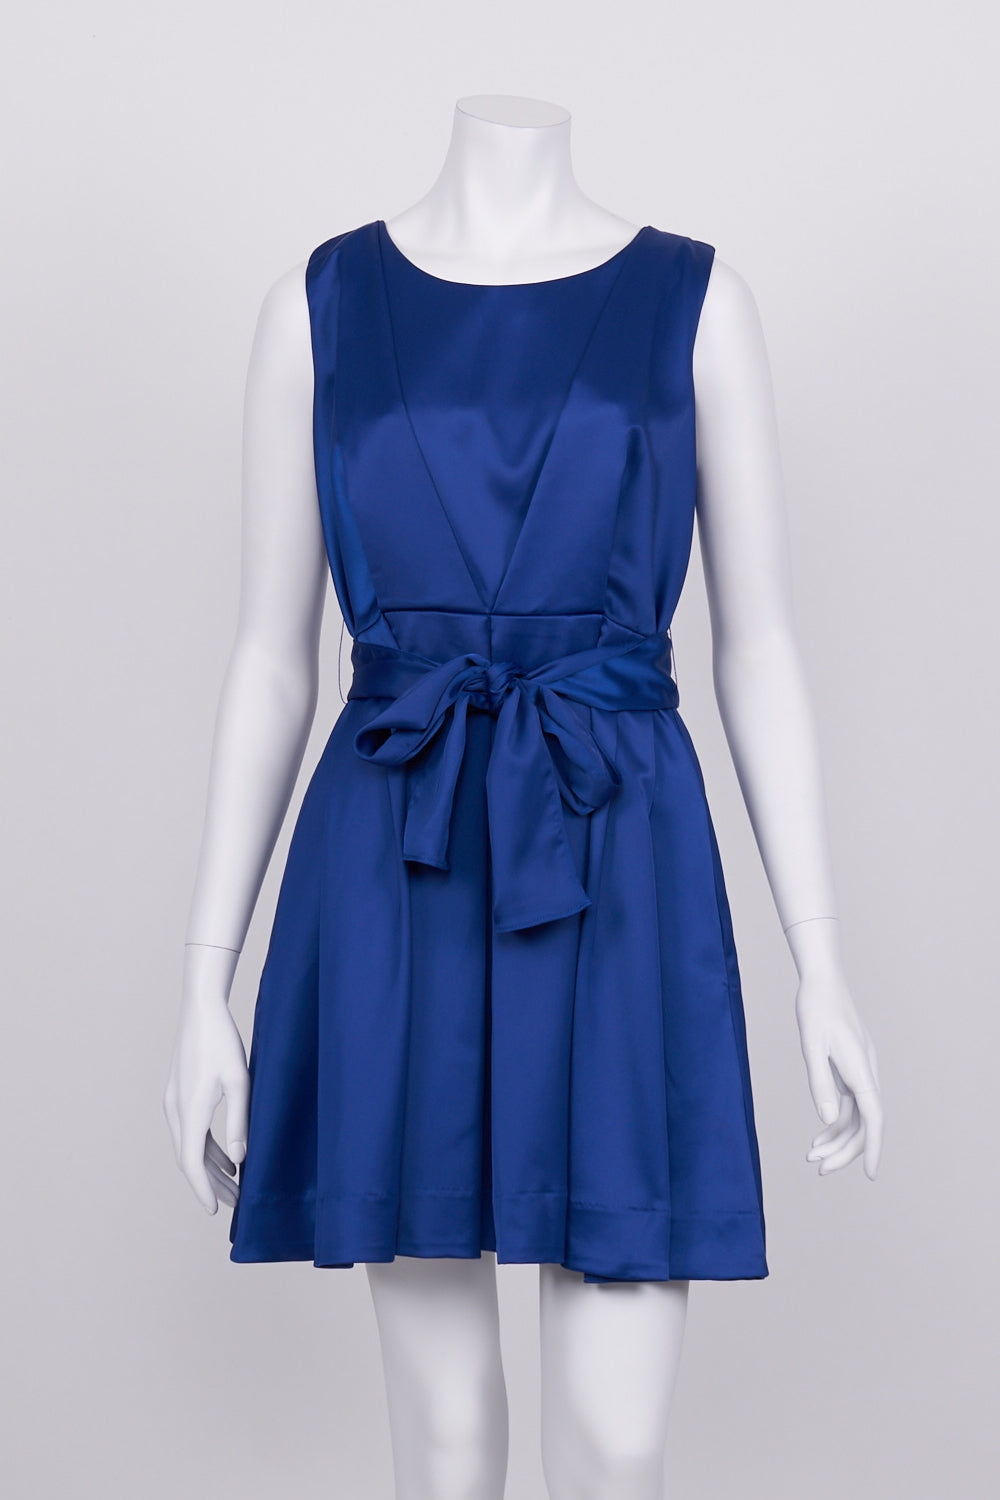 Bella Bleu Navy Pleated Sleeveless Dress 10